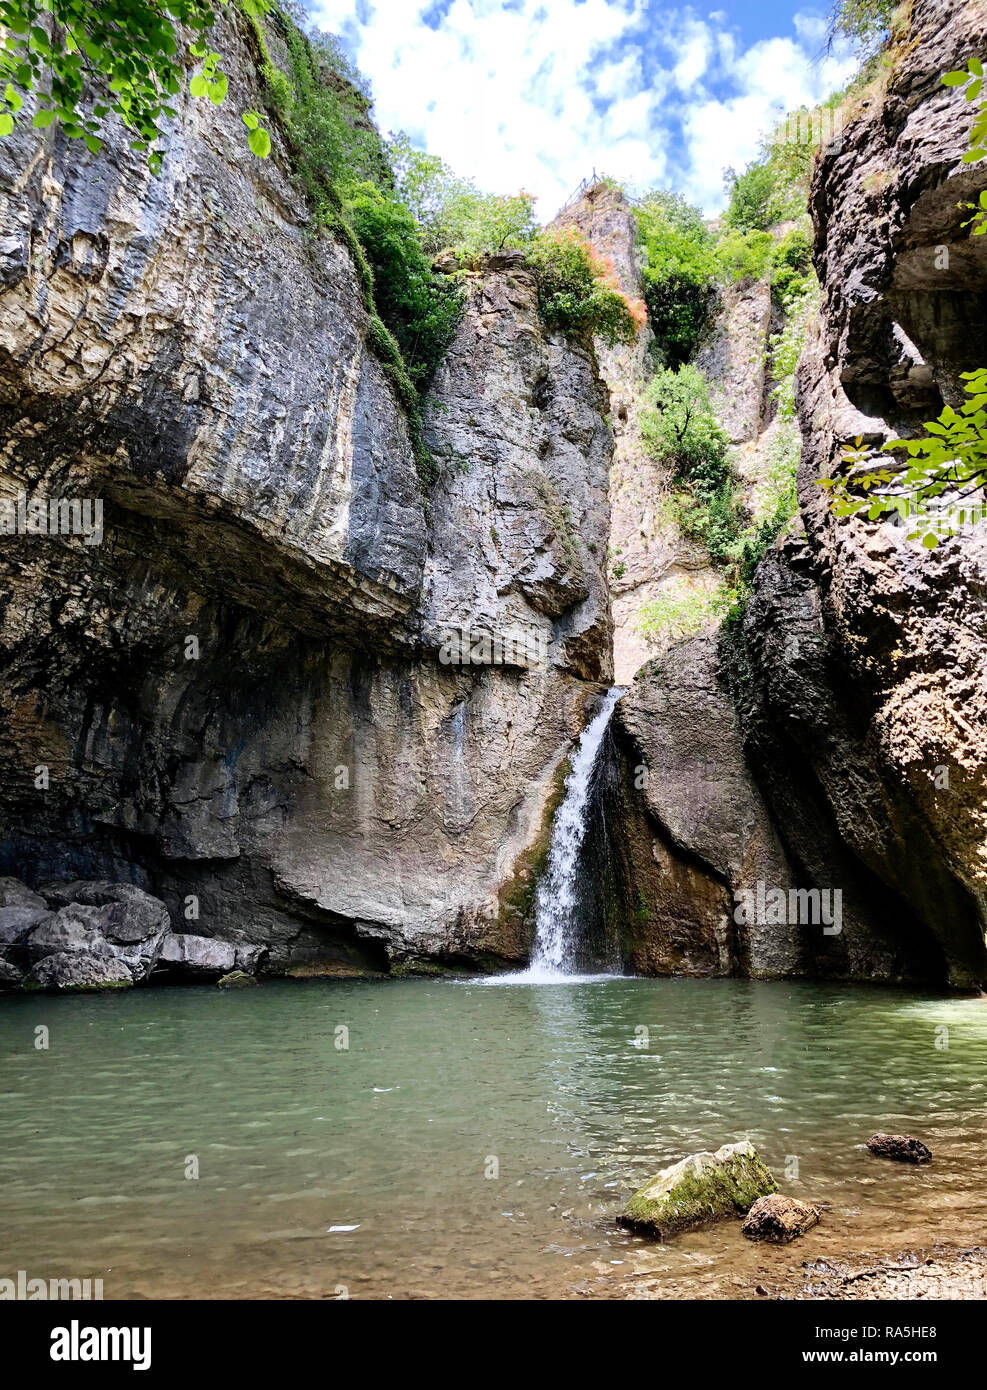 La cascade Momin Skok en Bulgarie Banque D'Images